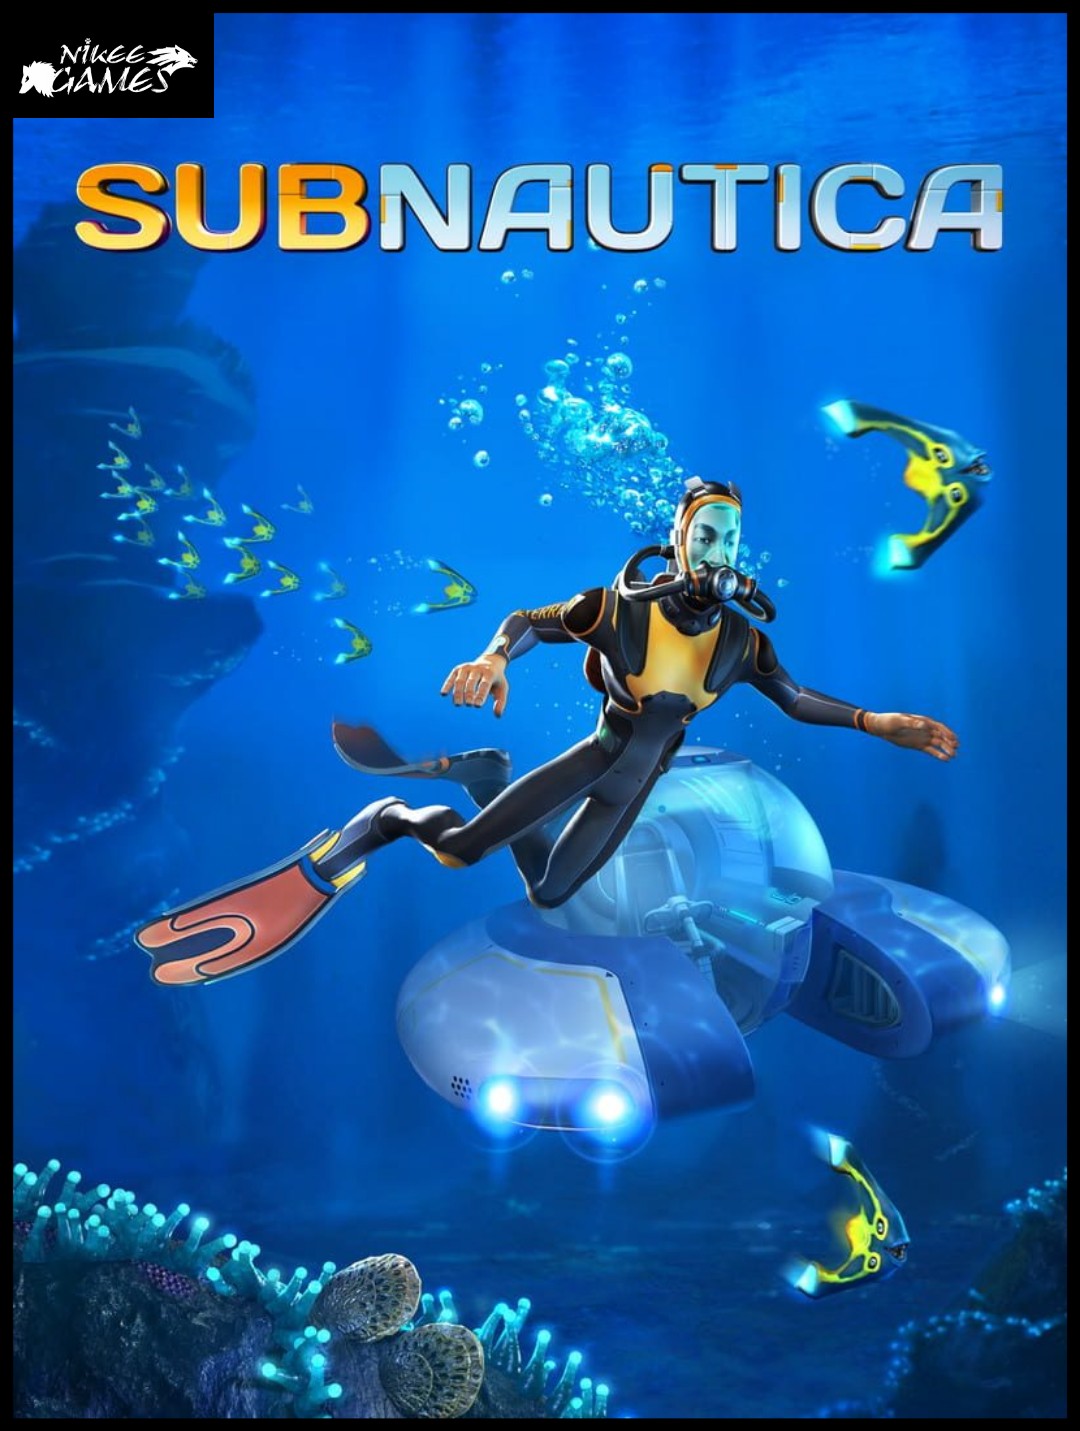 game like subnautica